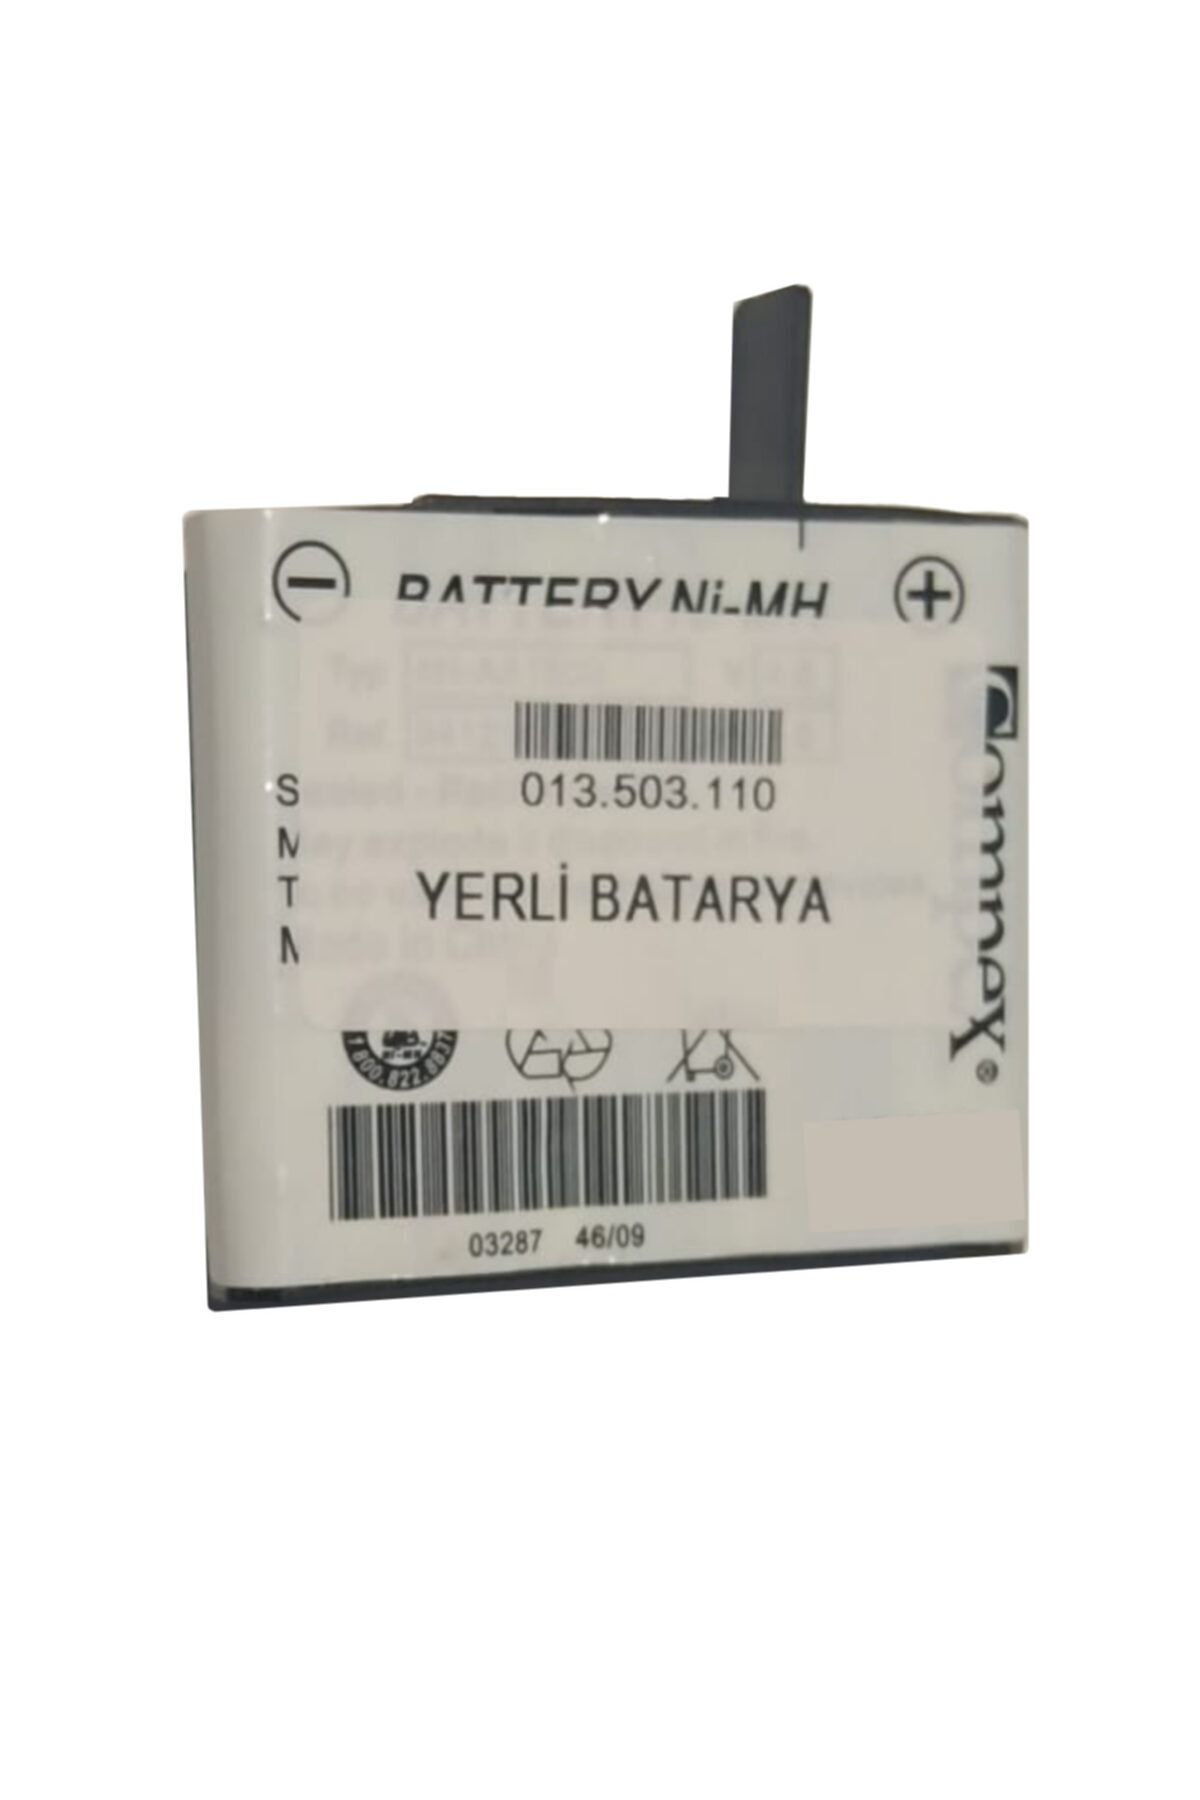 Compex Batarya 013.503.110